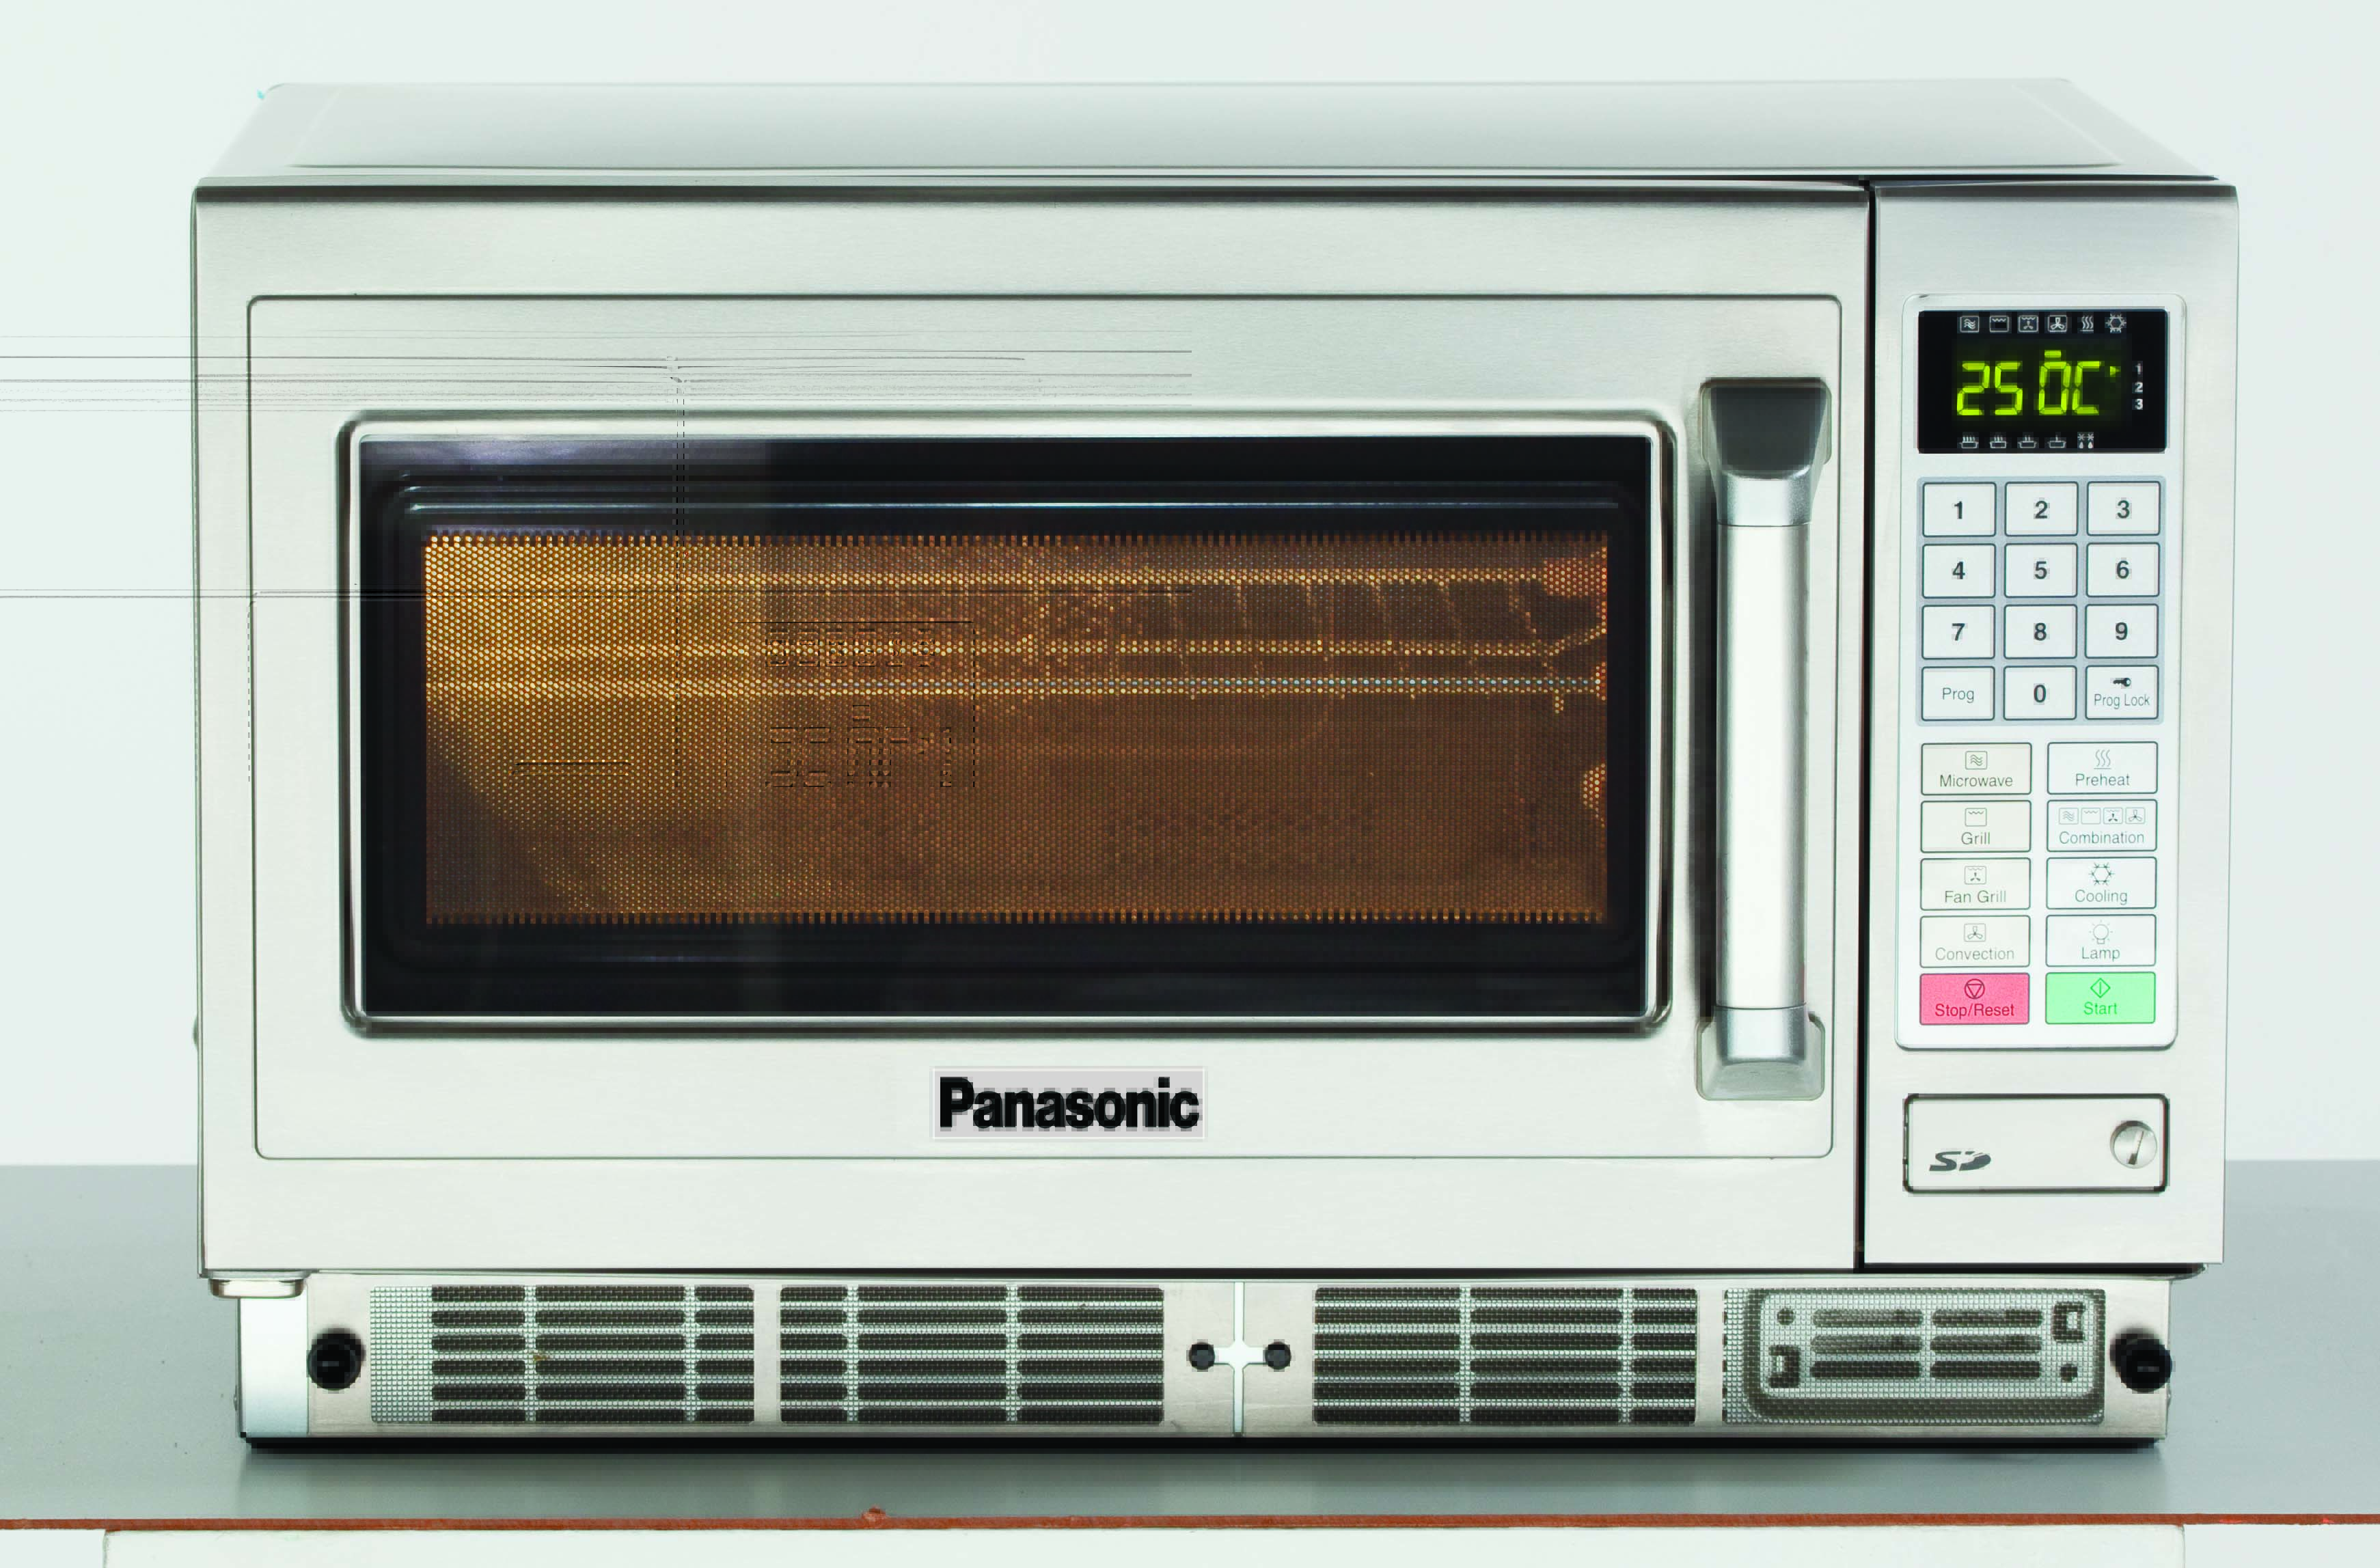 Food Service Machinery – Panasonic NE-C1275 Combination Oven